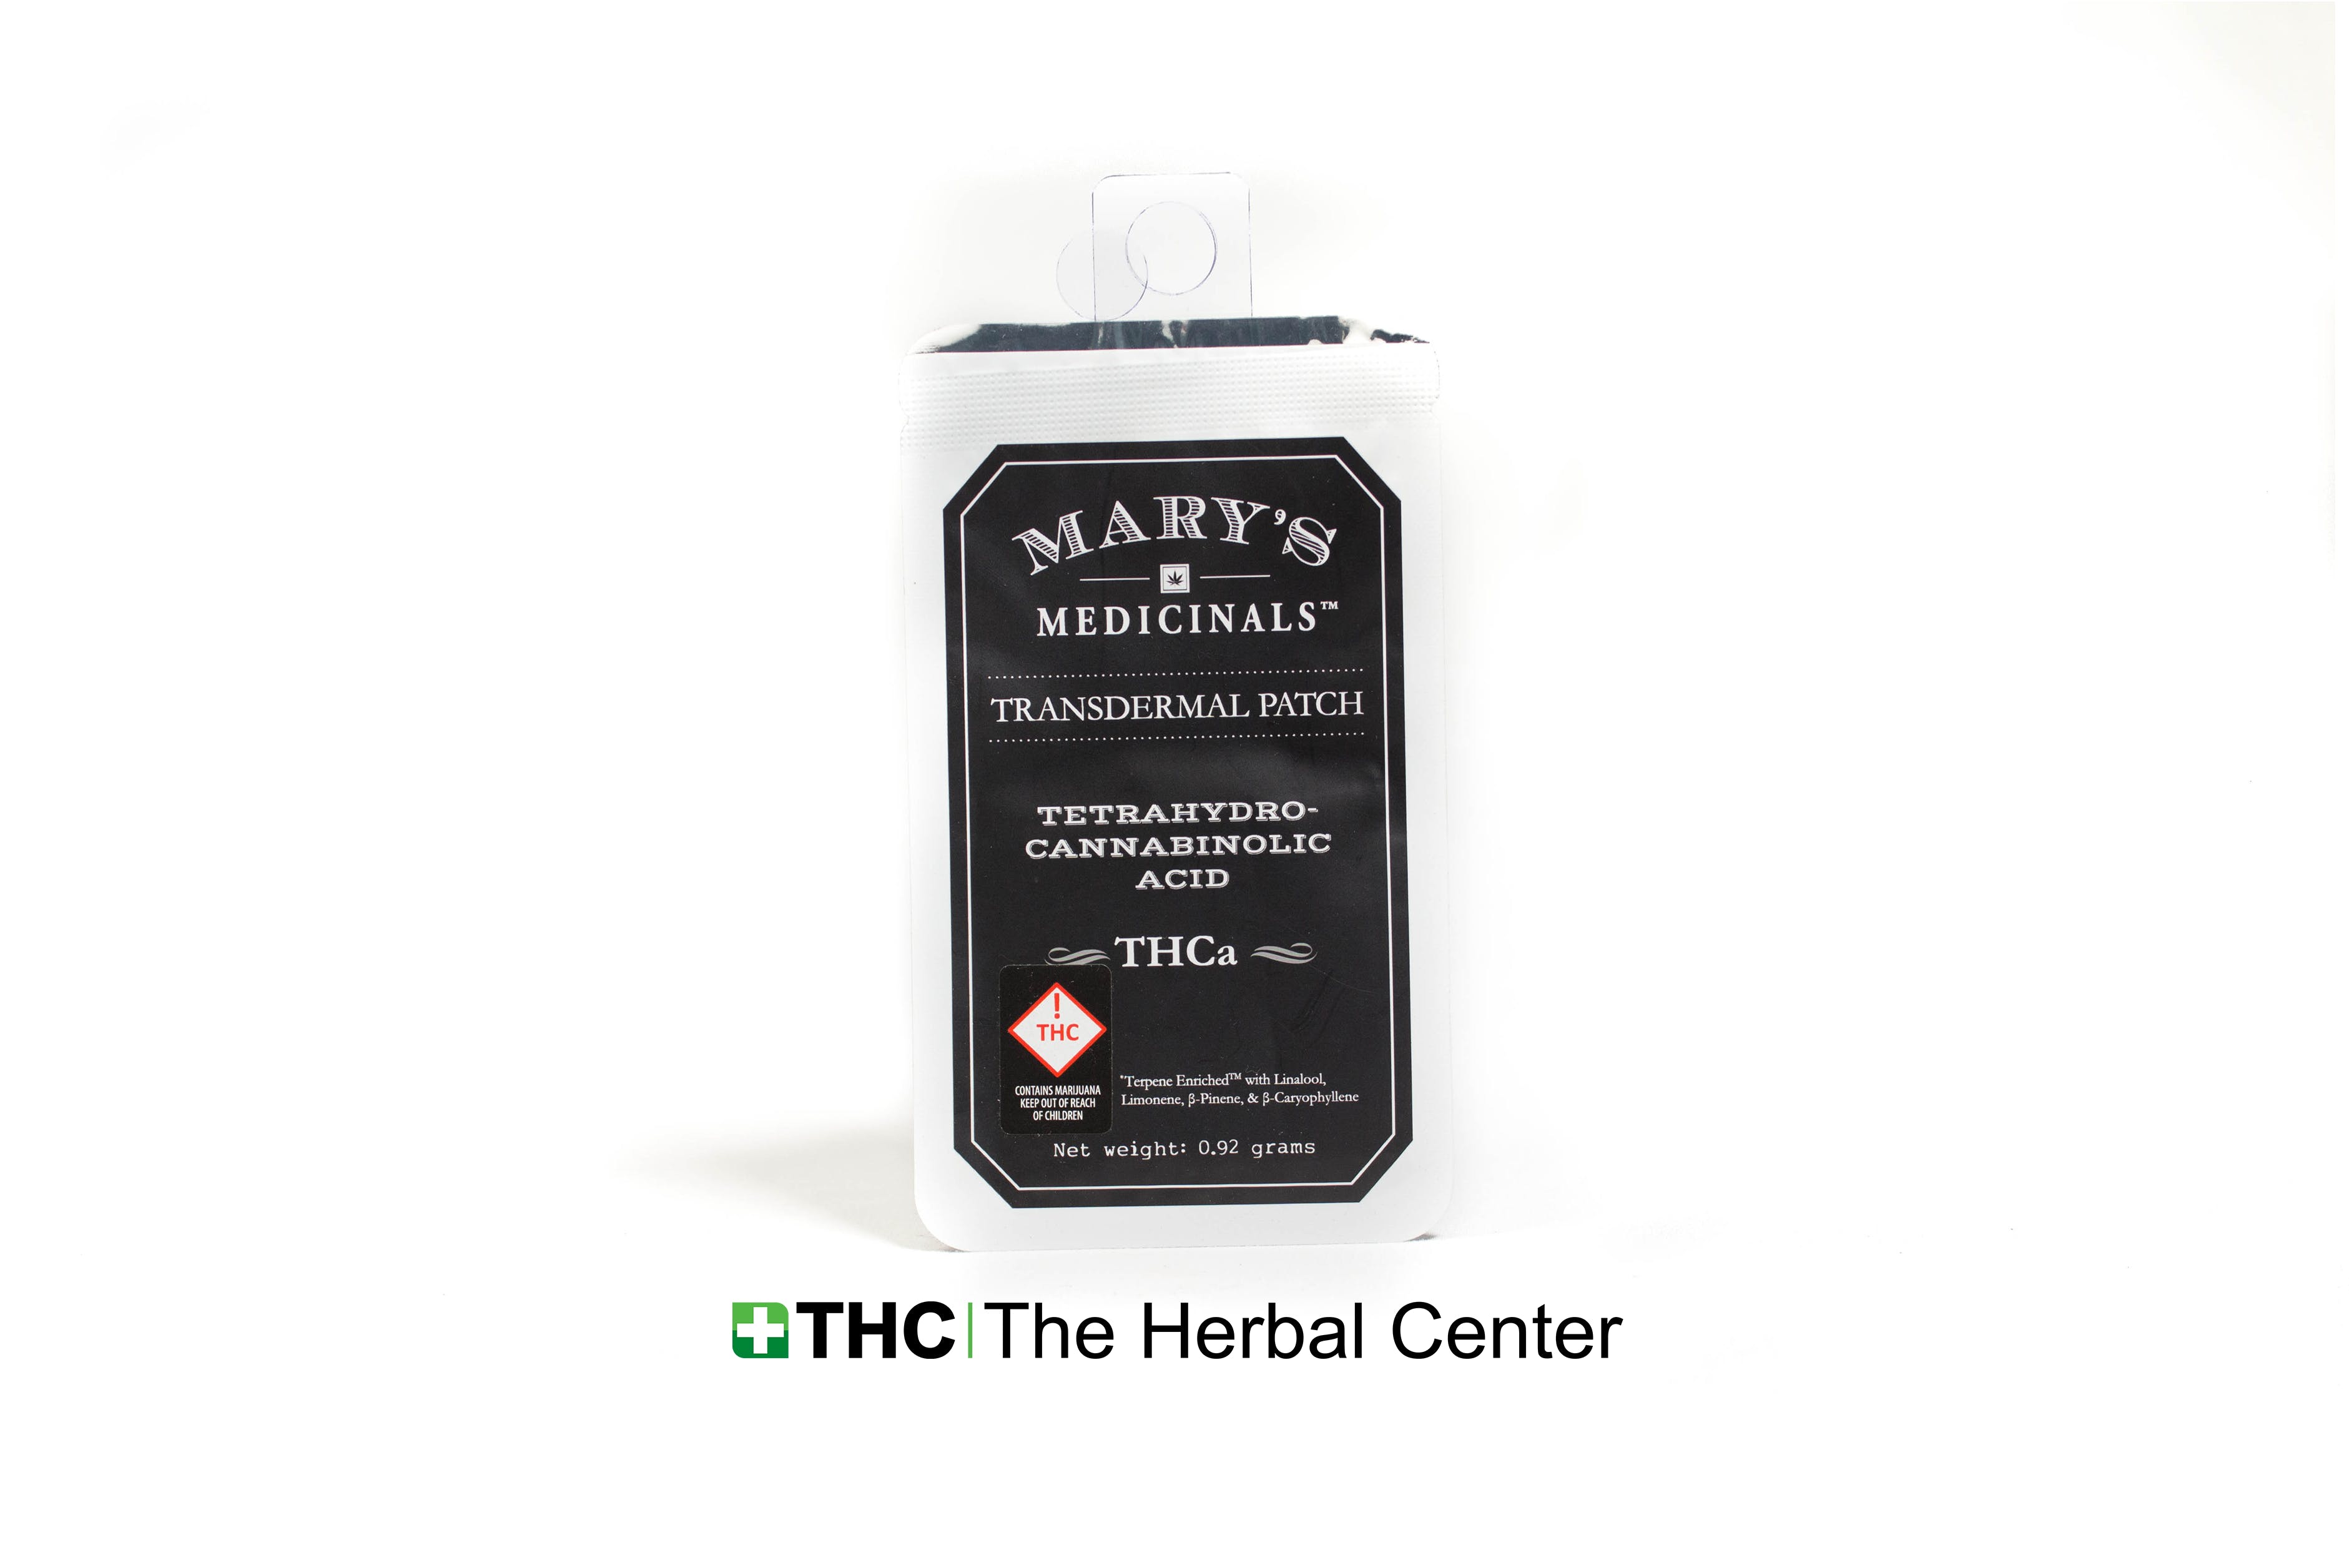 marijuana-dispensaries-the-herbal-center-broadway-rec-in-denver-marys-medicinals-transdermal-patch-a-c2-80-c2-93-thca